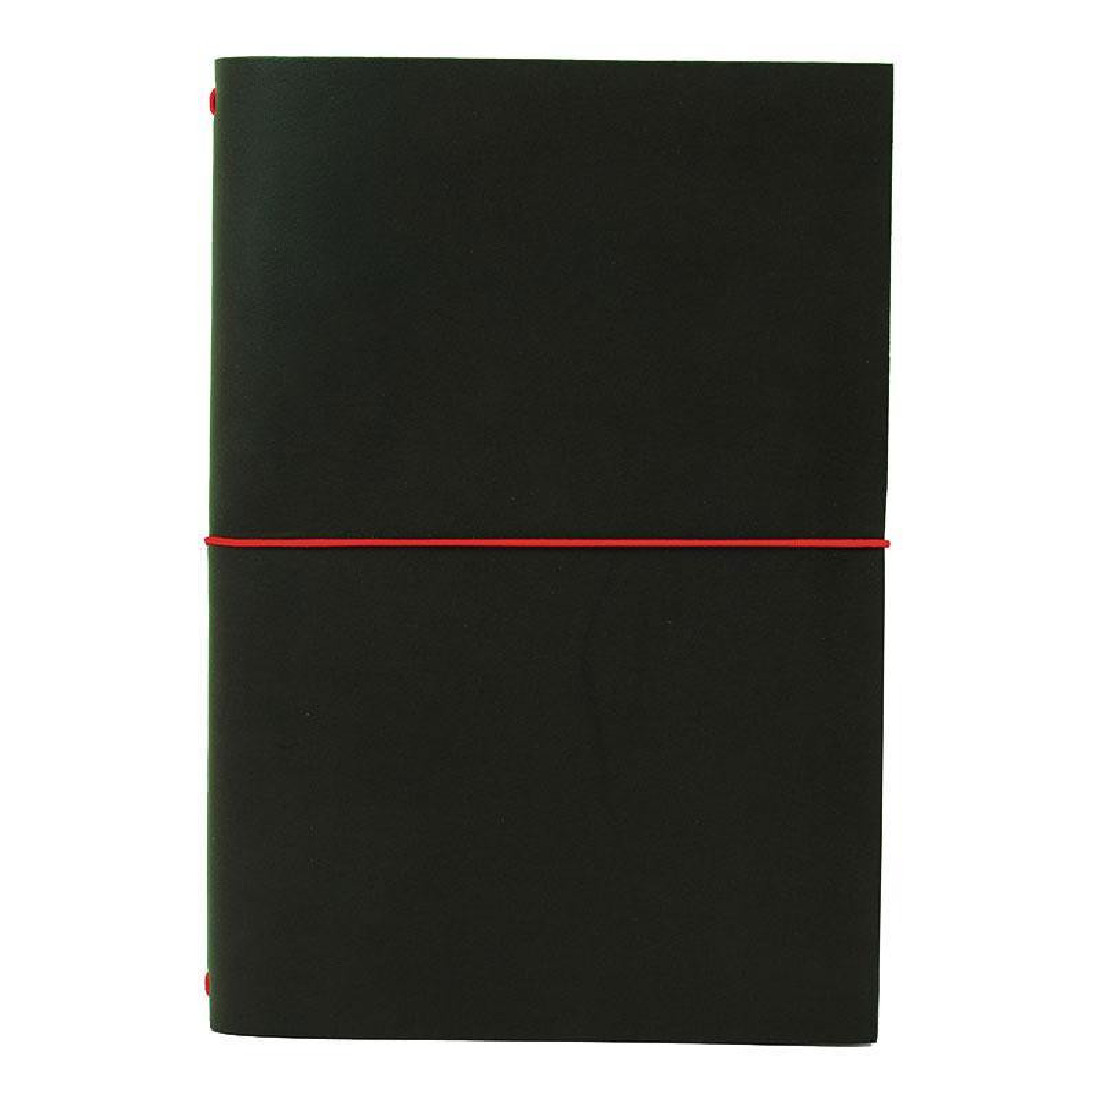 Paper Republic grand voyageur [xl] black leather journal